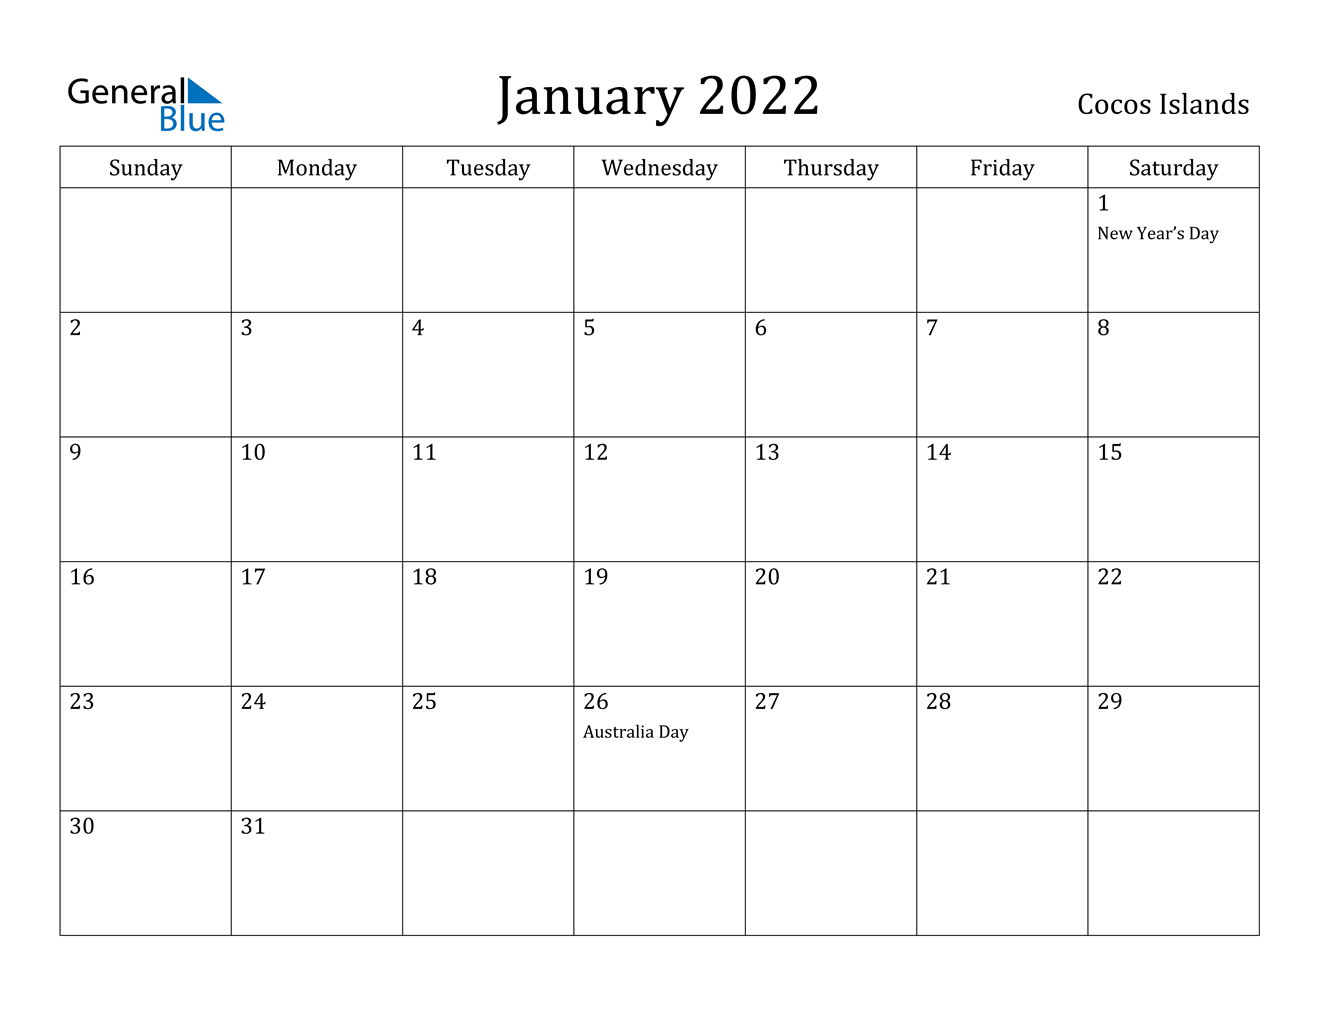 January 2022 Calendar - Cocos Islands